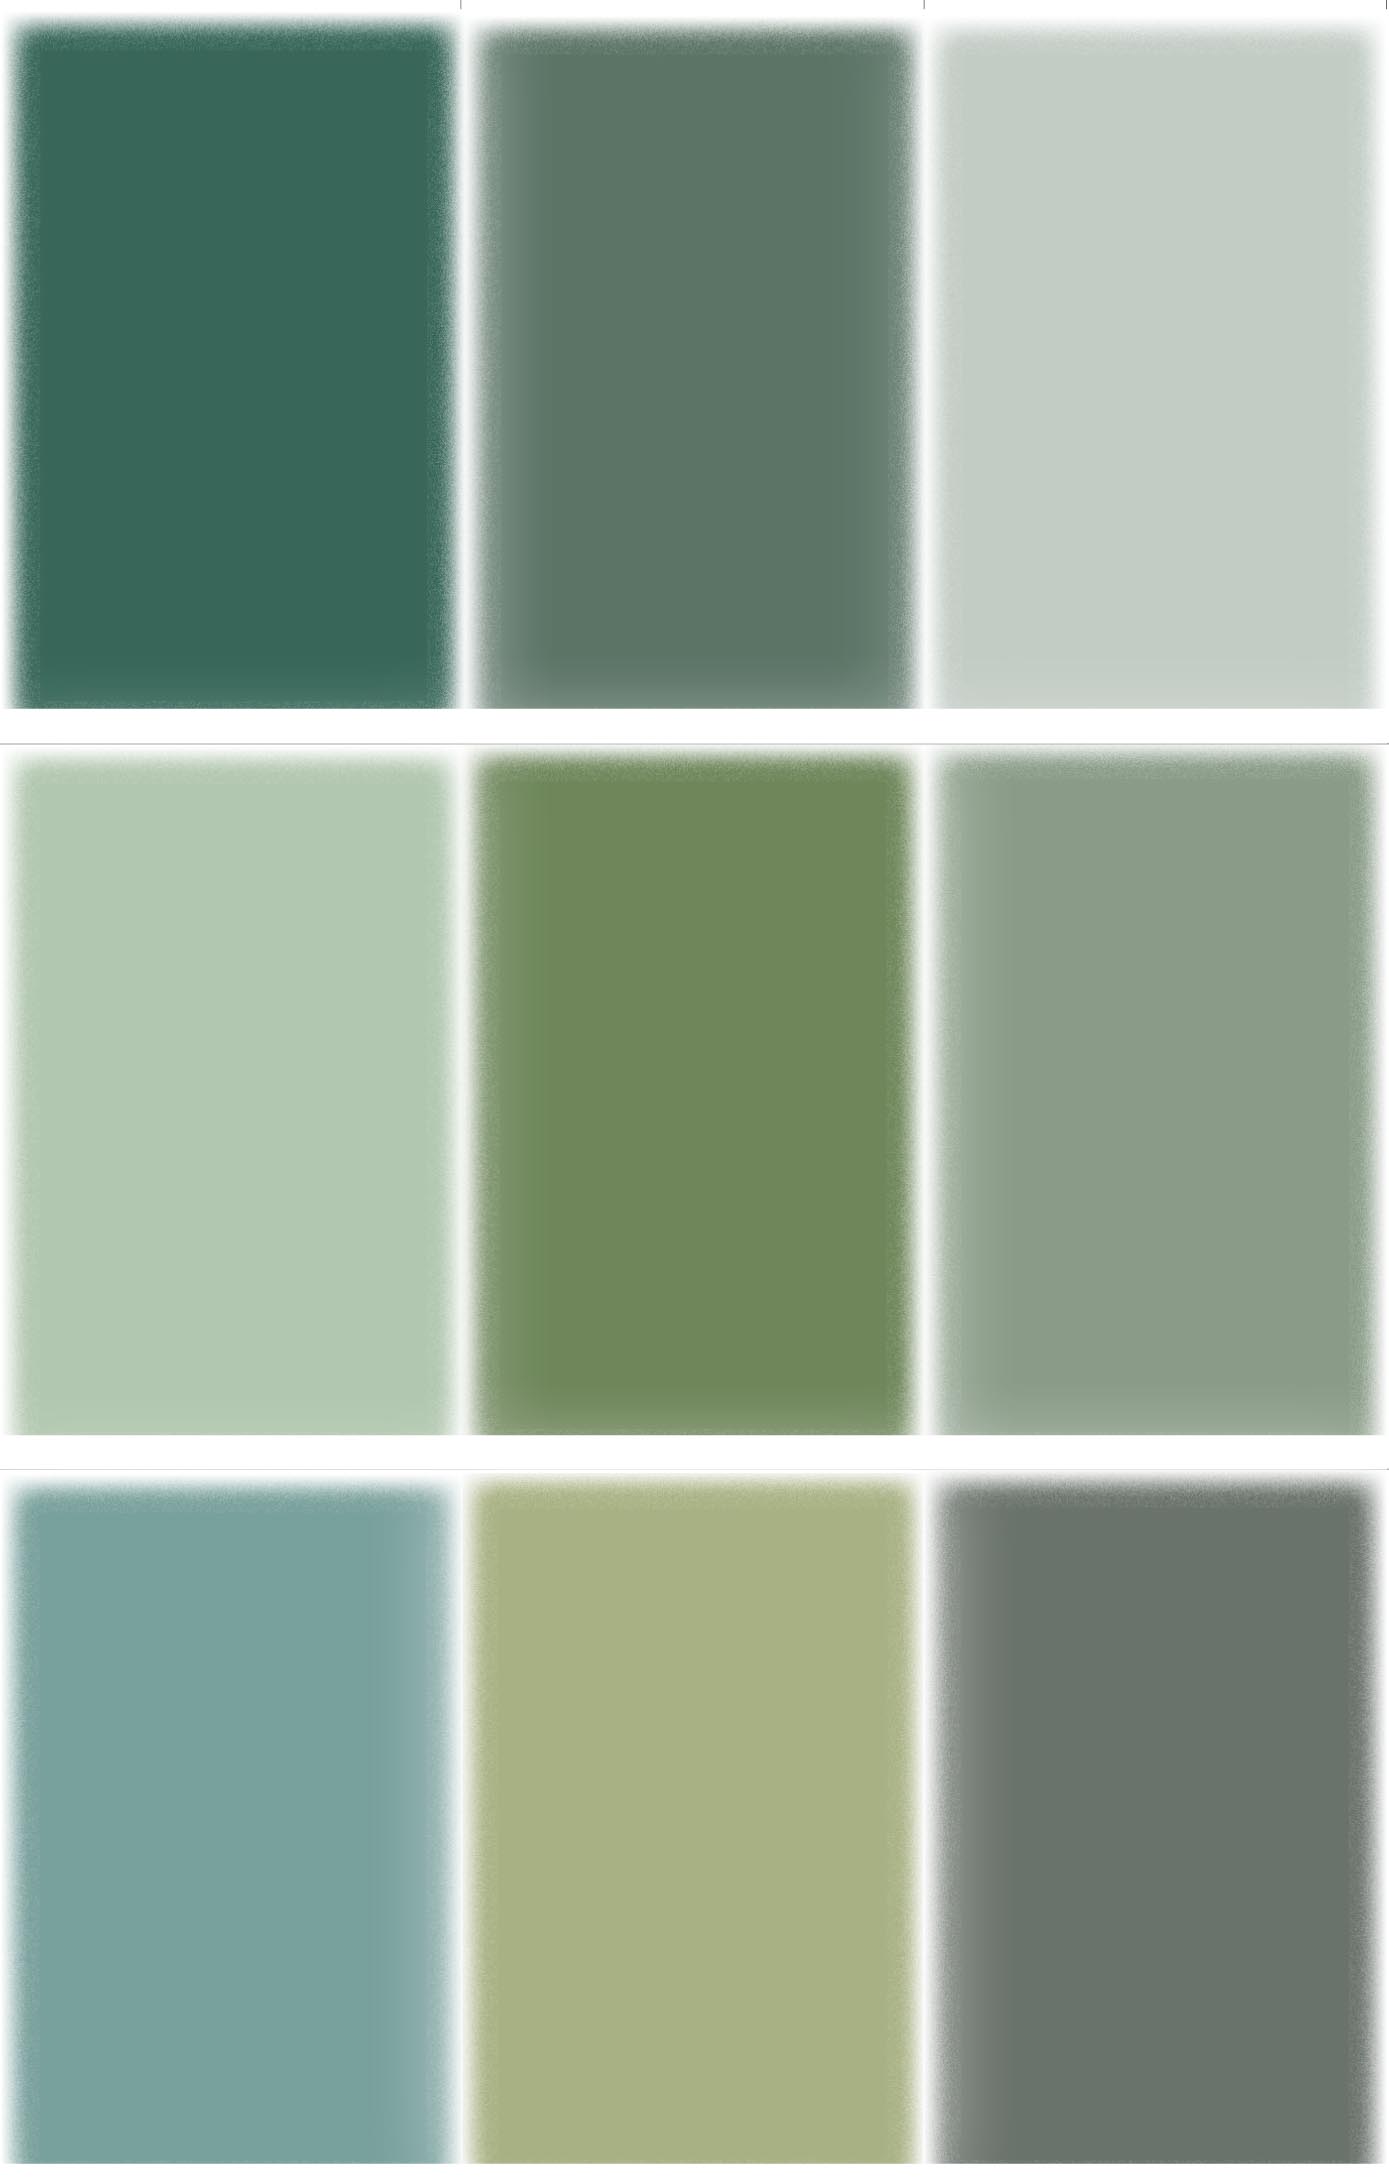 16 grønne + grå ark-9